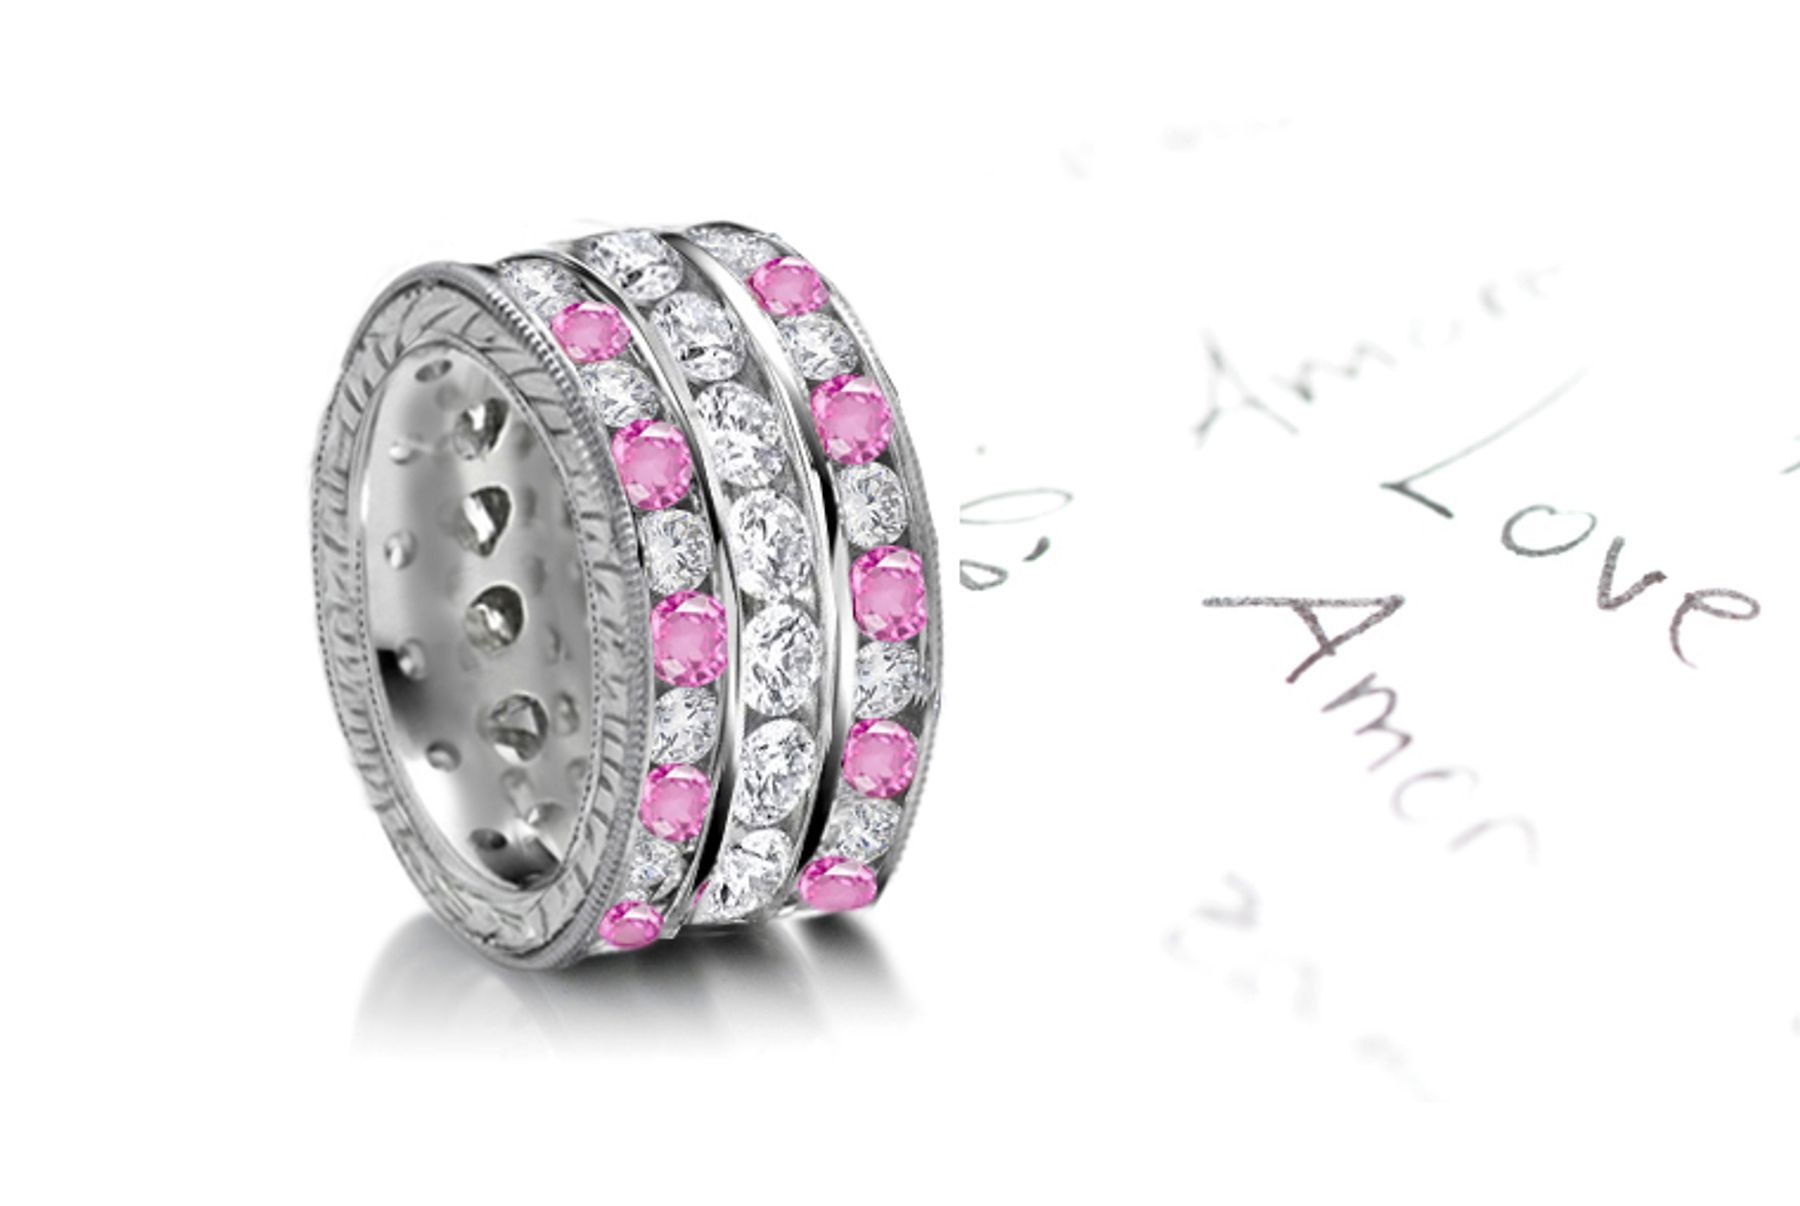 Dramatic Large Grand 3 Rich Hue Sapphire & Diamond Eternity Diamond Ring